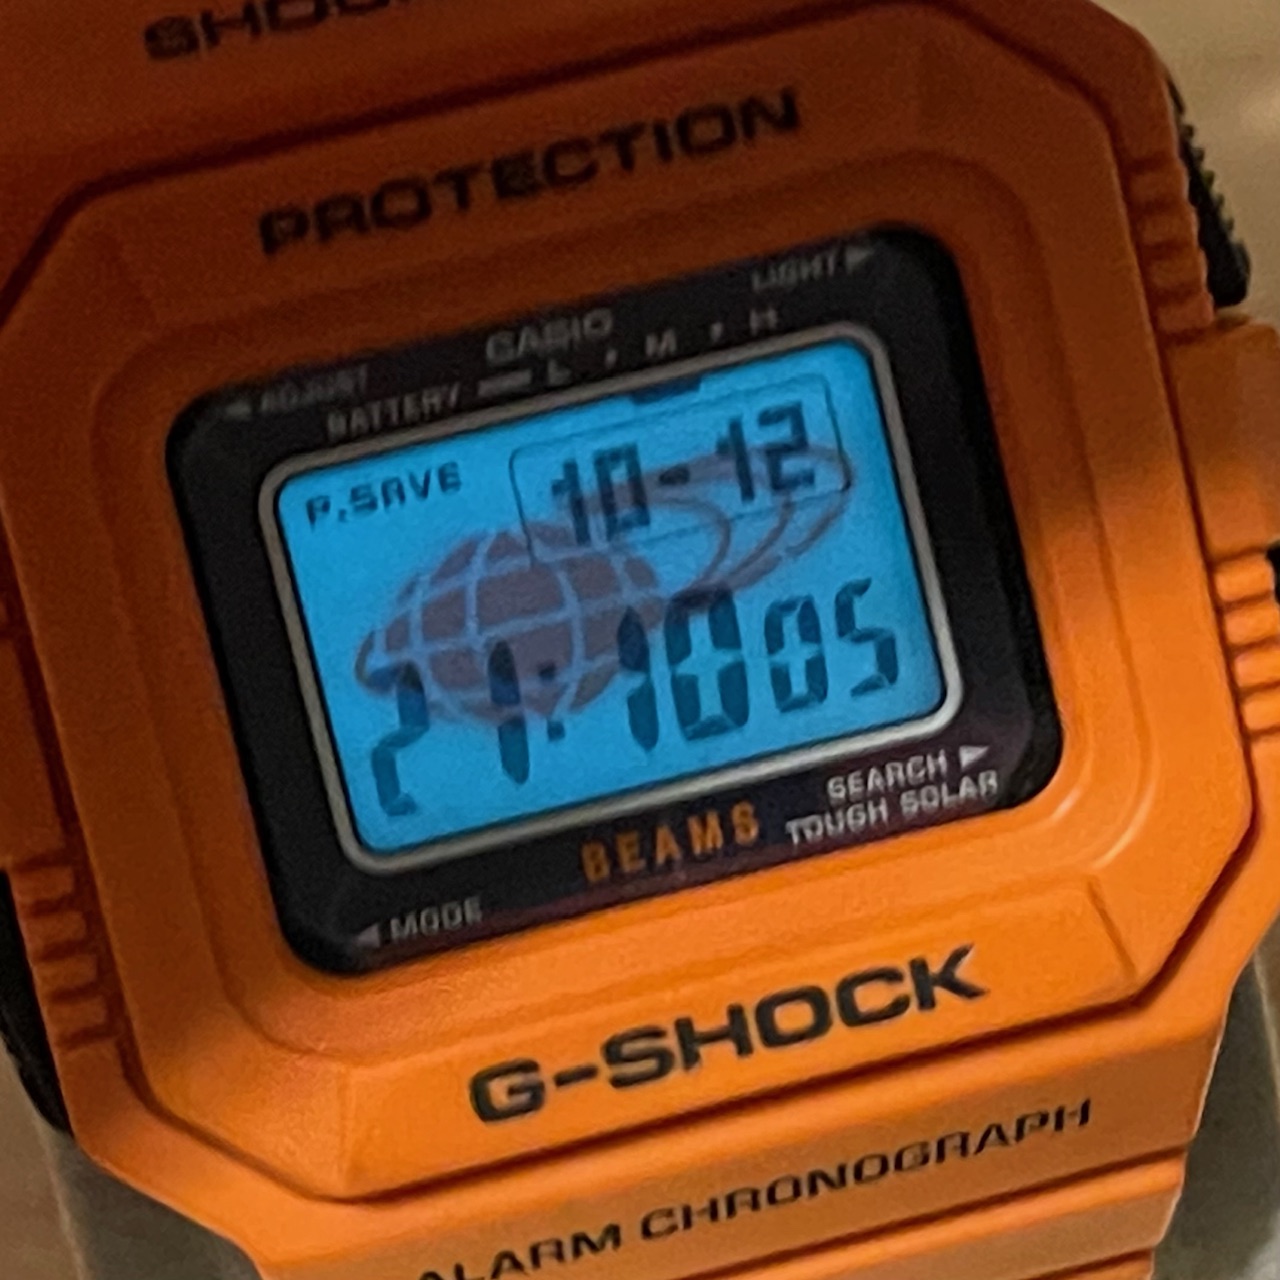 WTS] Casio G-Shock G-5500BE-4 Beams Collaboration Orange Tough